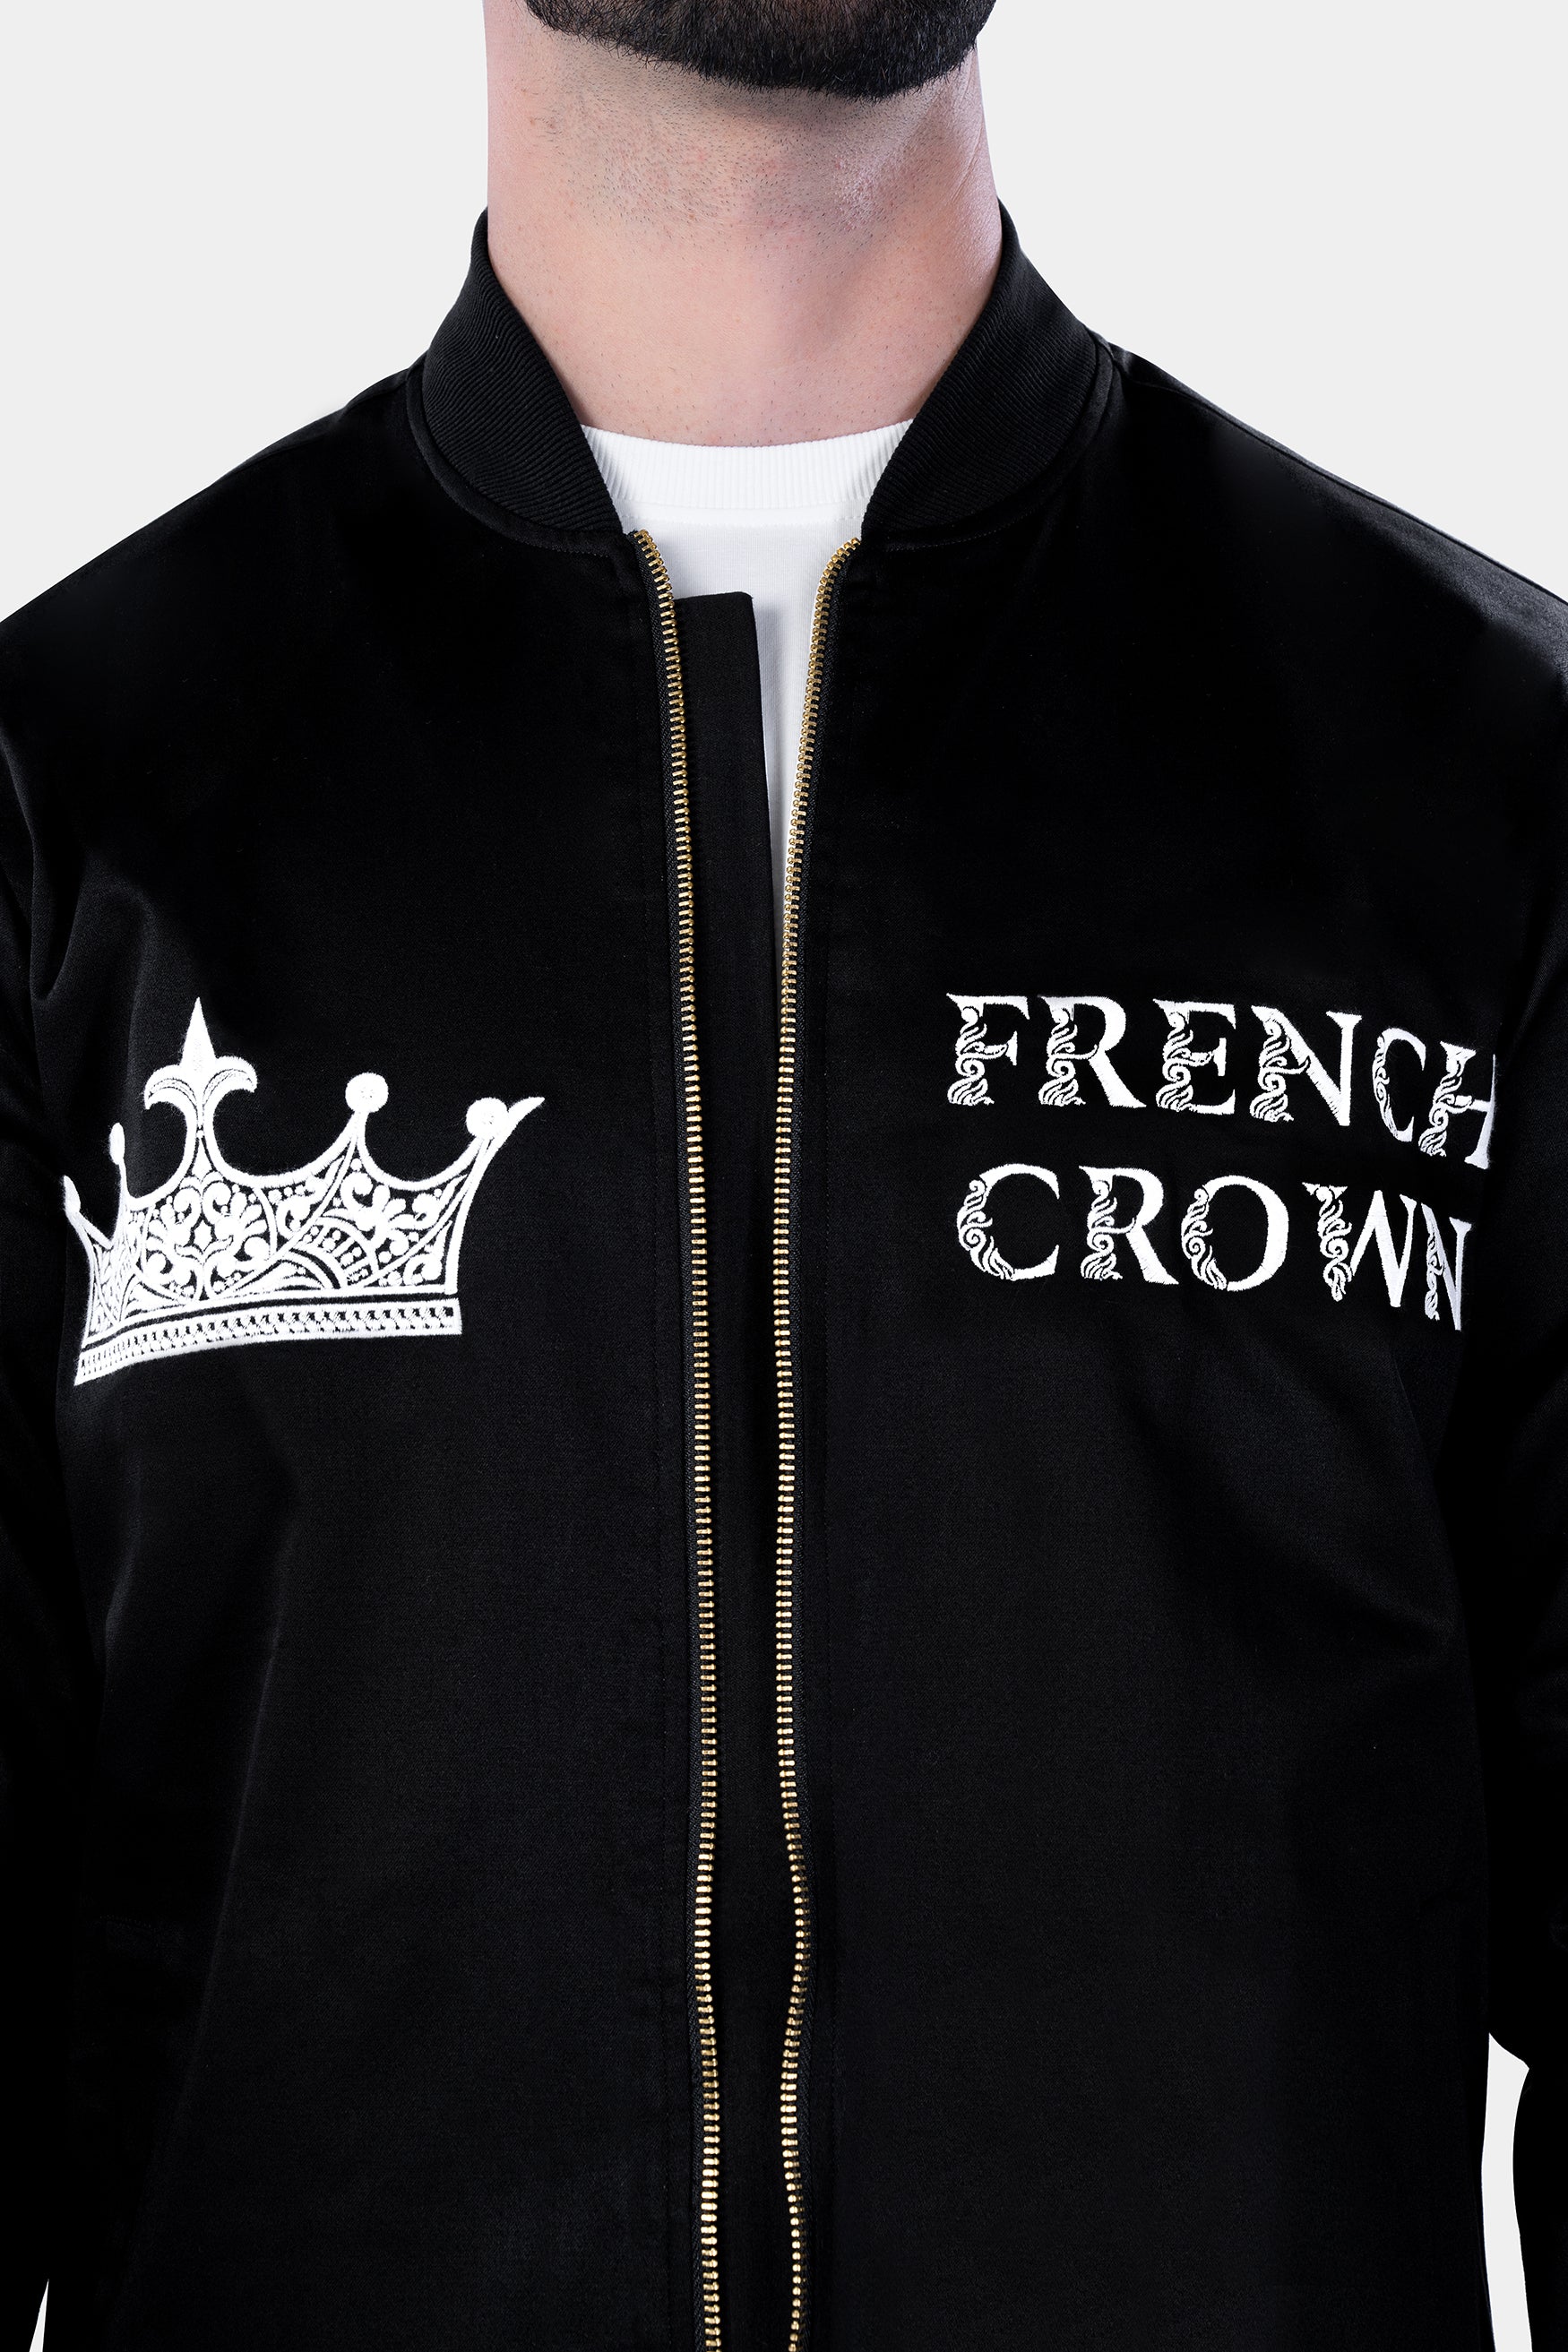 Jade Black French Crown Embroidered Premium Cotton Designer Bomber Jacket